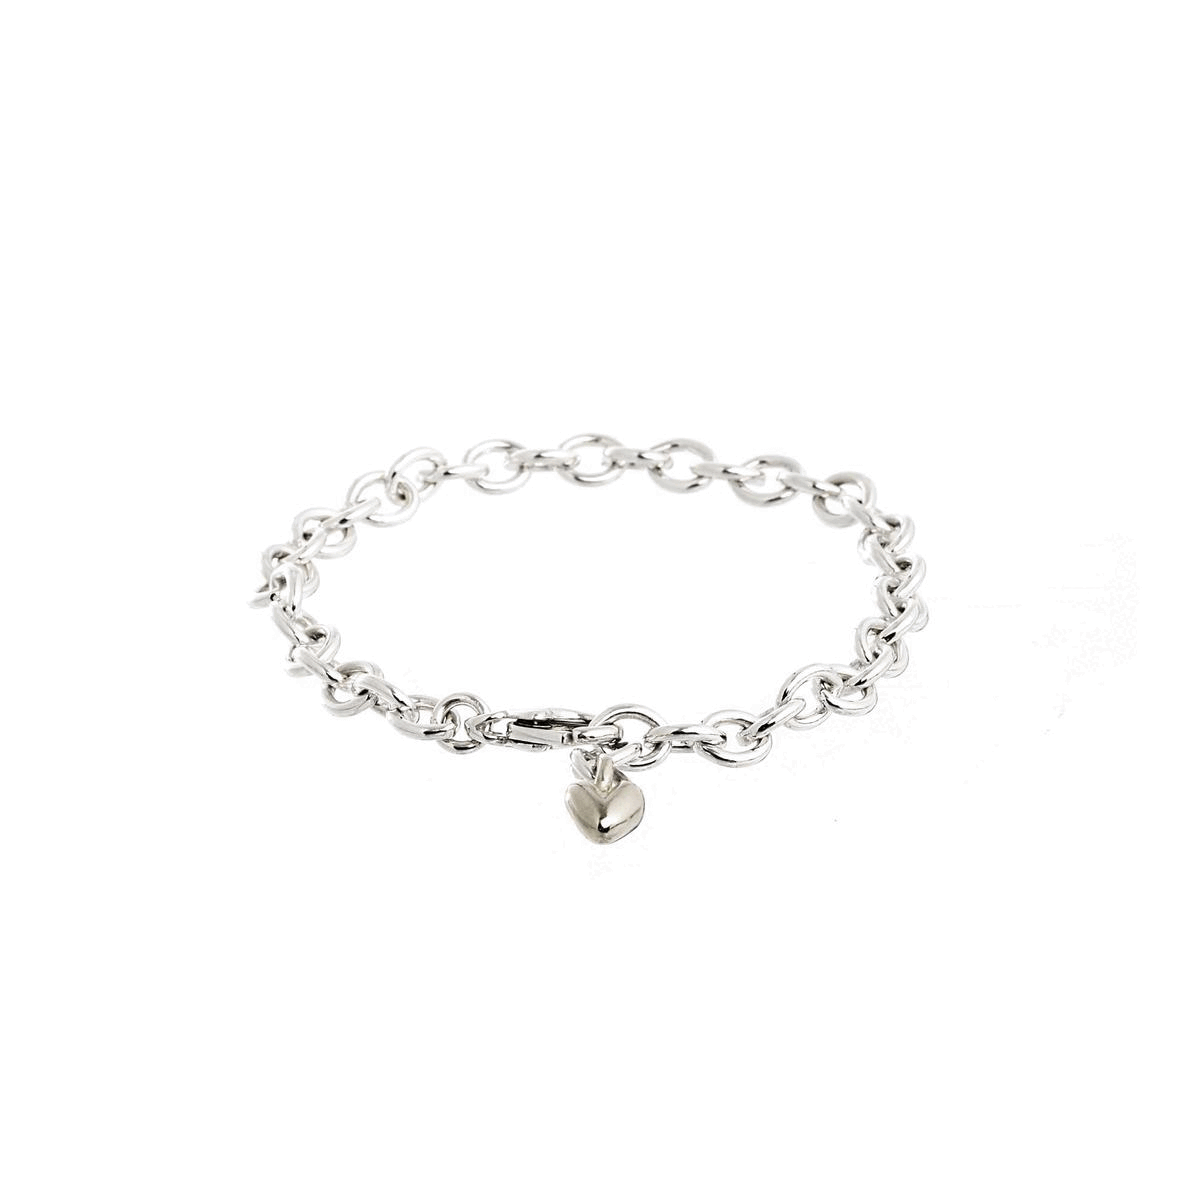 silver heart starter charm bracelet suitable for a child adjustable